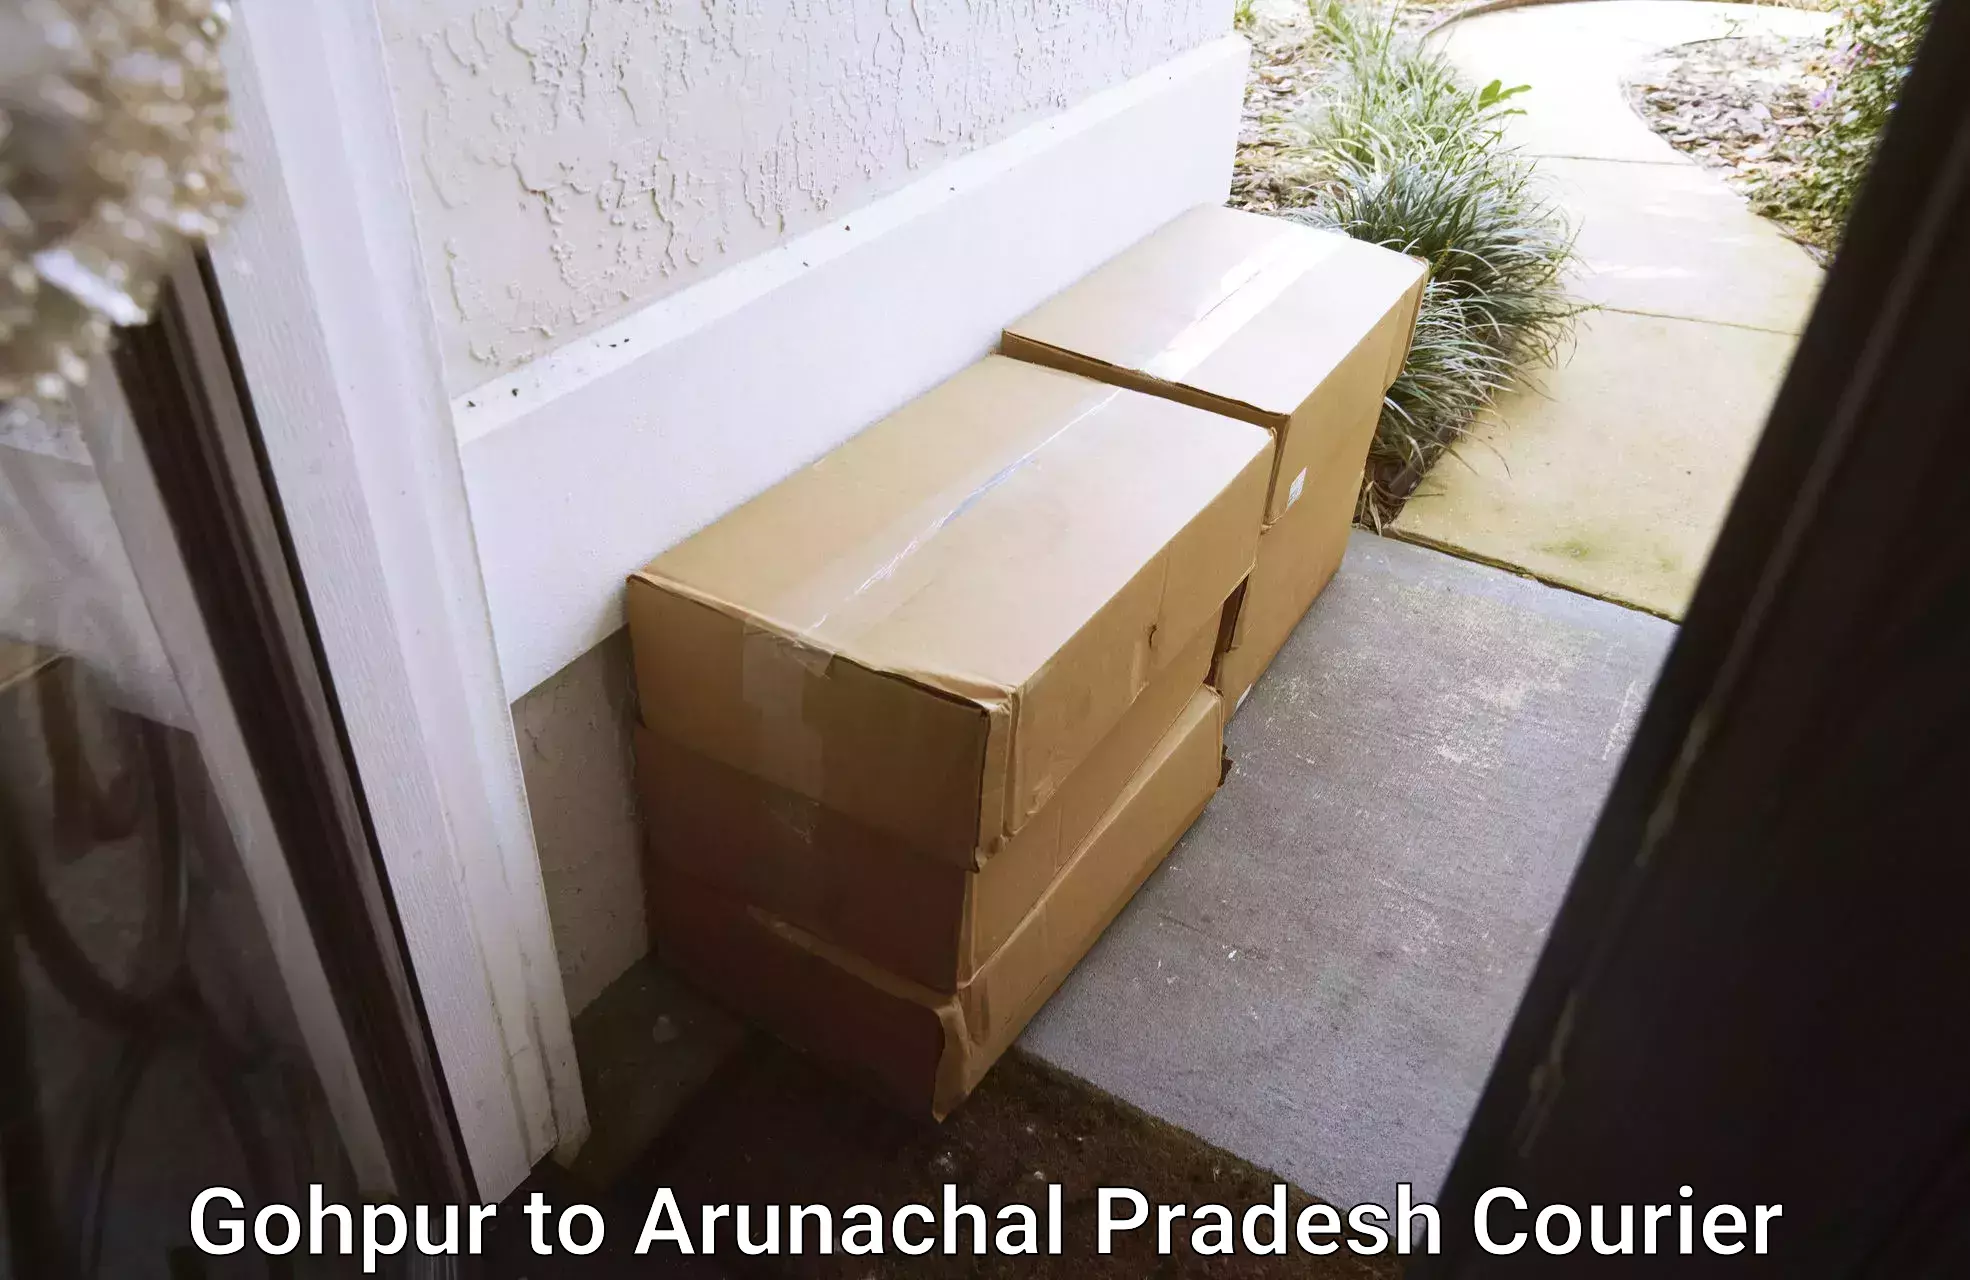 Professional courier services in Gohpur to Arunachal Pradesh